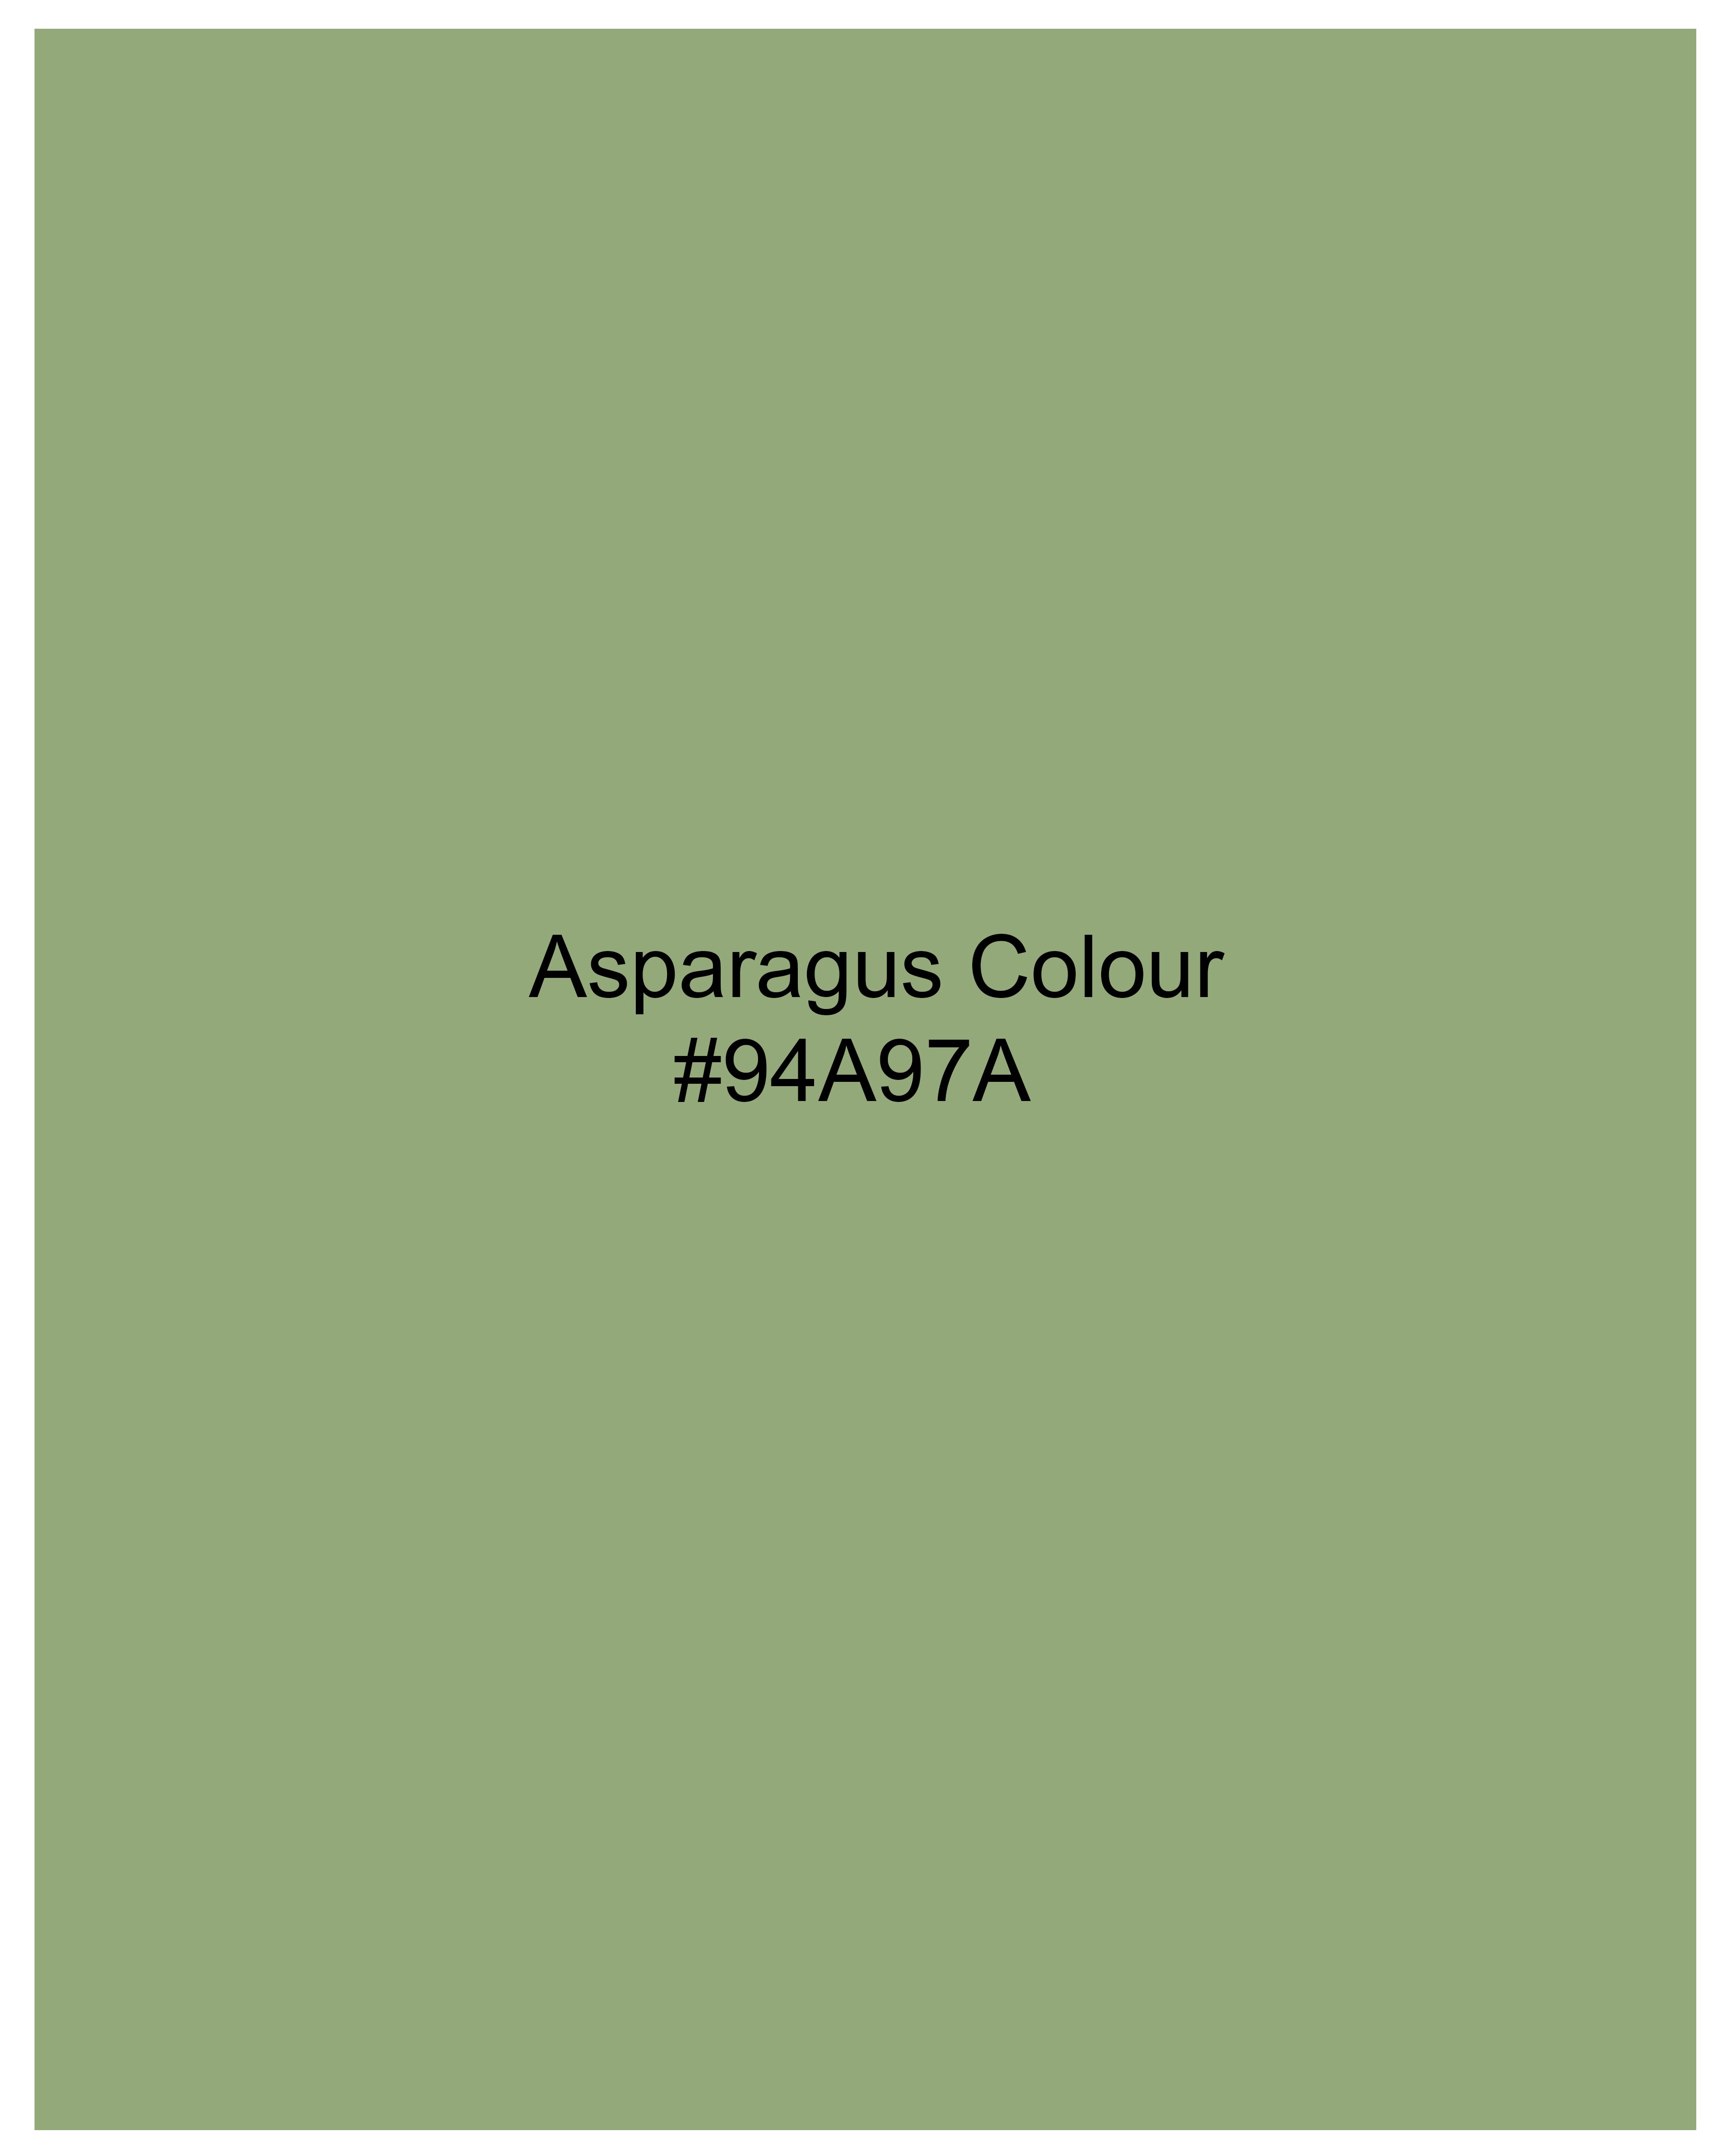 Asparagus Green Pleated Premium Cotton Crop Top WTP016-32, WTP016-34, WTP016-36, WTP016-38, WTP016-40, WTP016-42